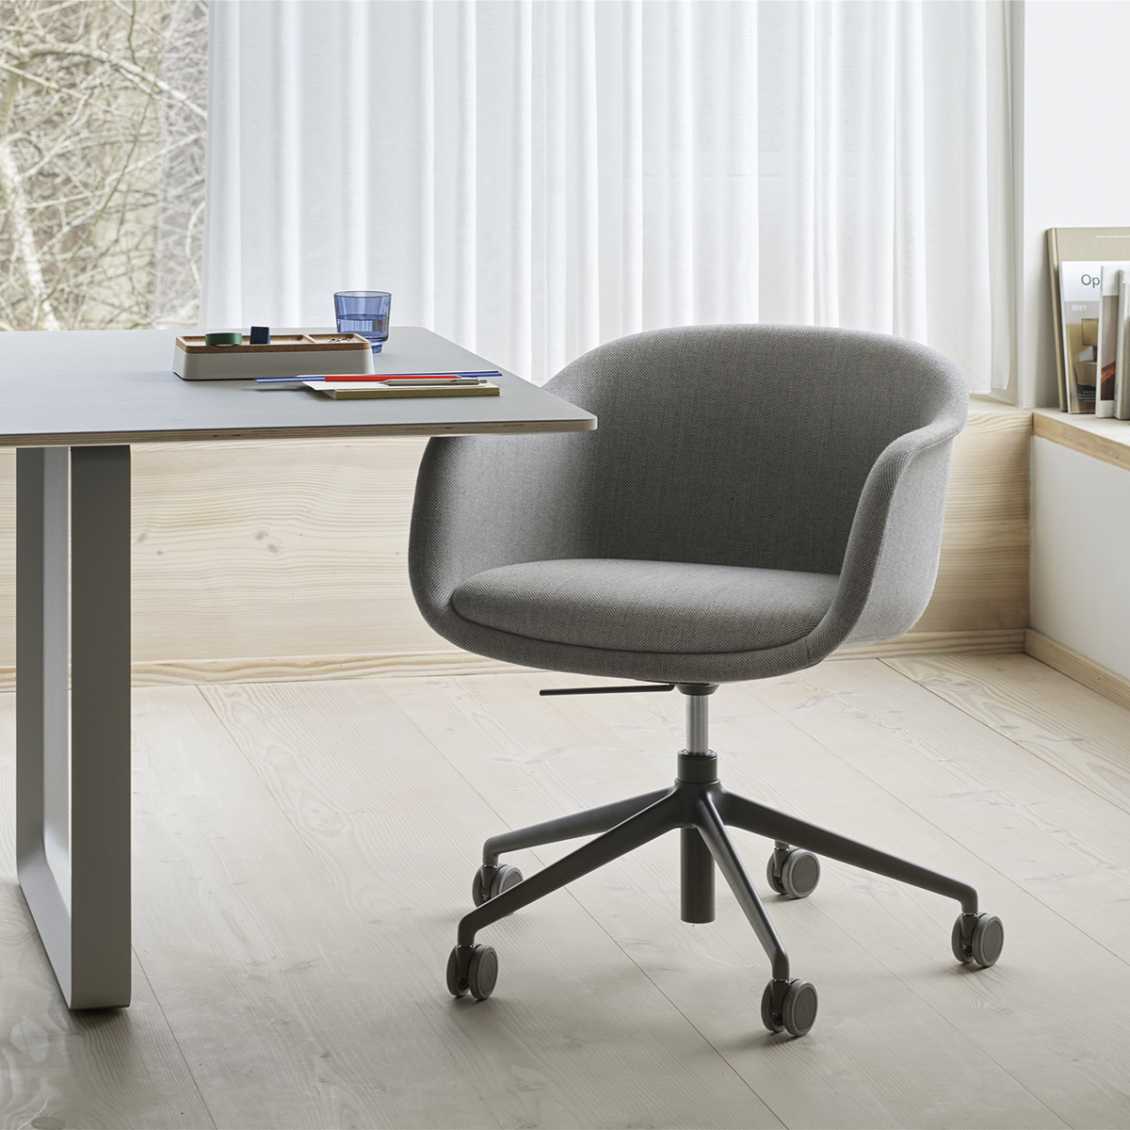 https://www.fundesign.nl/media/catalog/product/m/u/muuto-fiber-conference-armchair-with-wheels-sfeer1.jpg